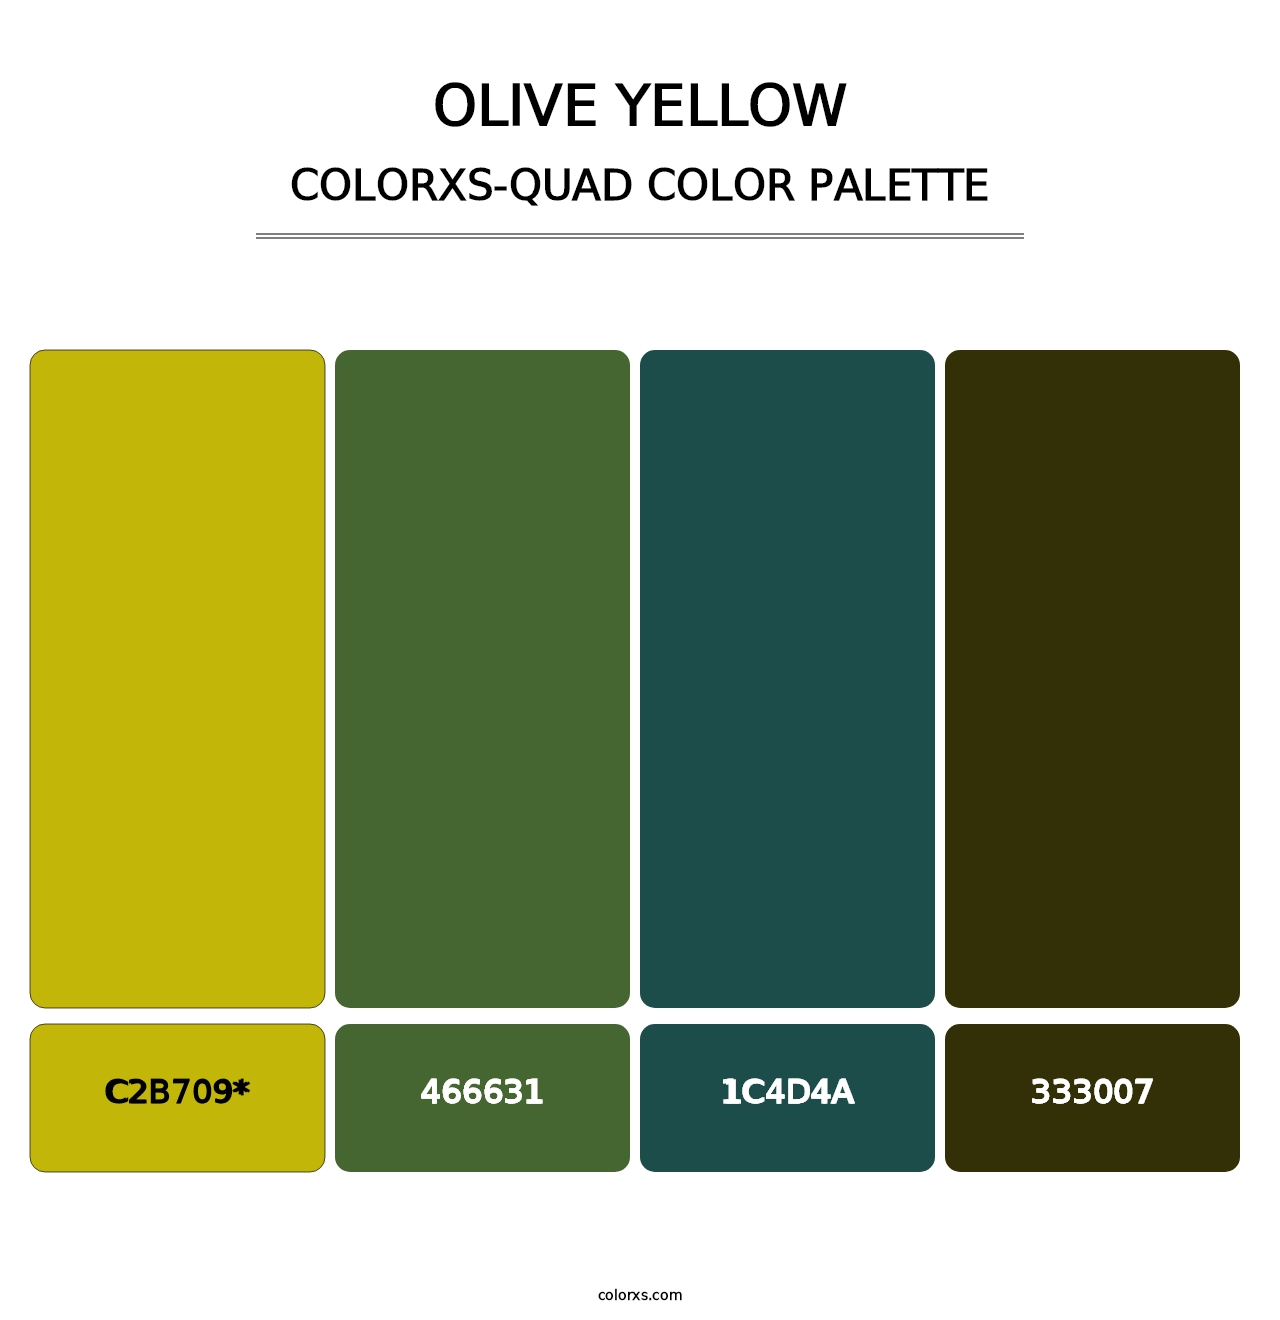 Olive Yellow - Colorxs Quad Palette